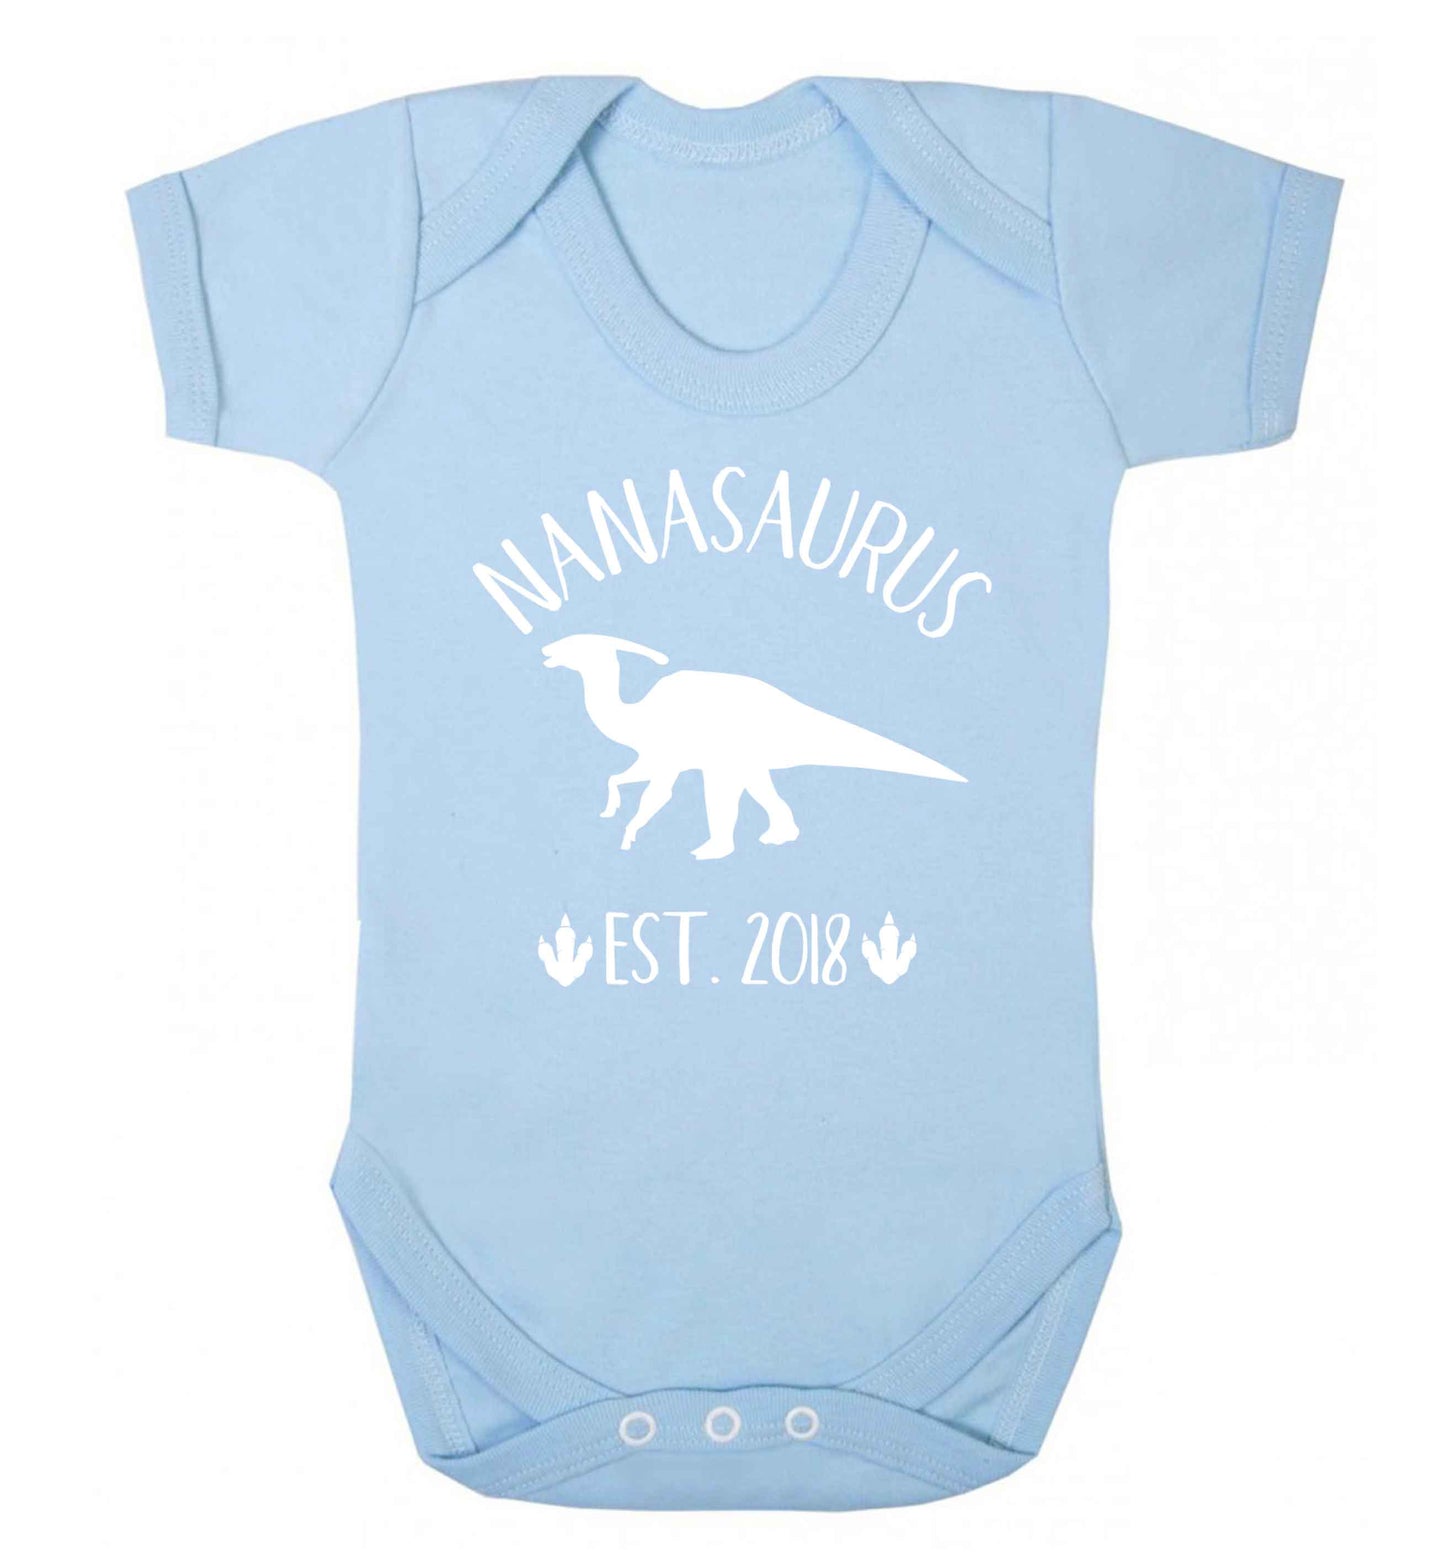 Personalised nanasaurus since (custom date) Baby Vest pale blue 18-24 months